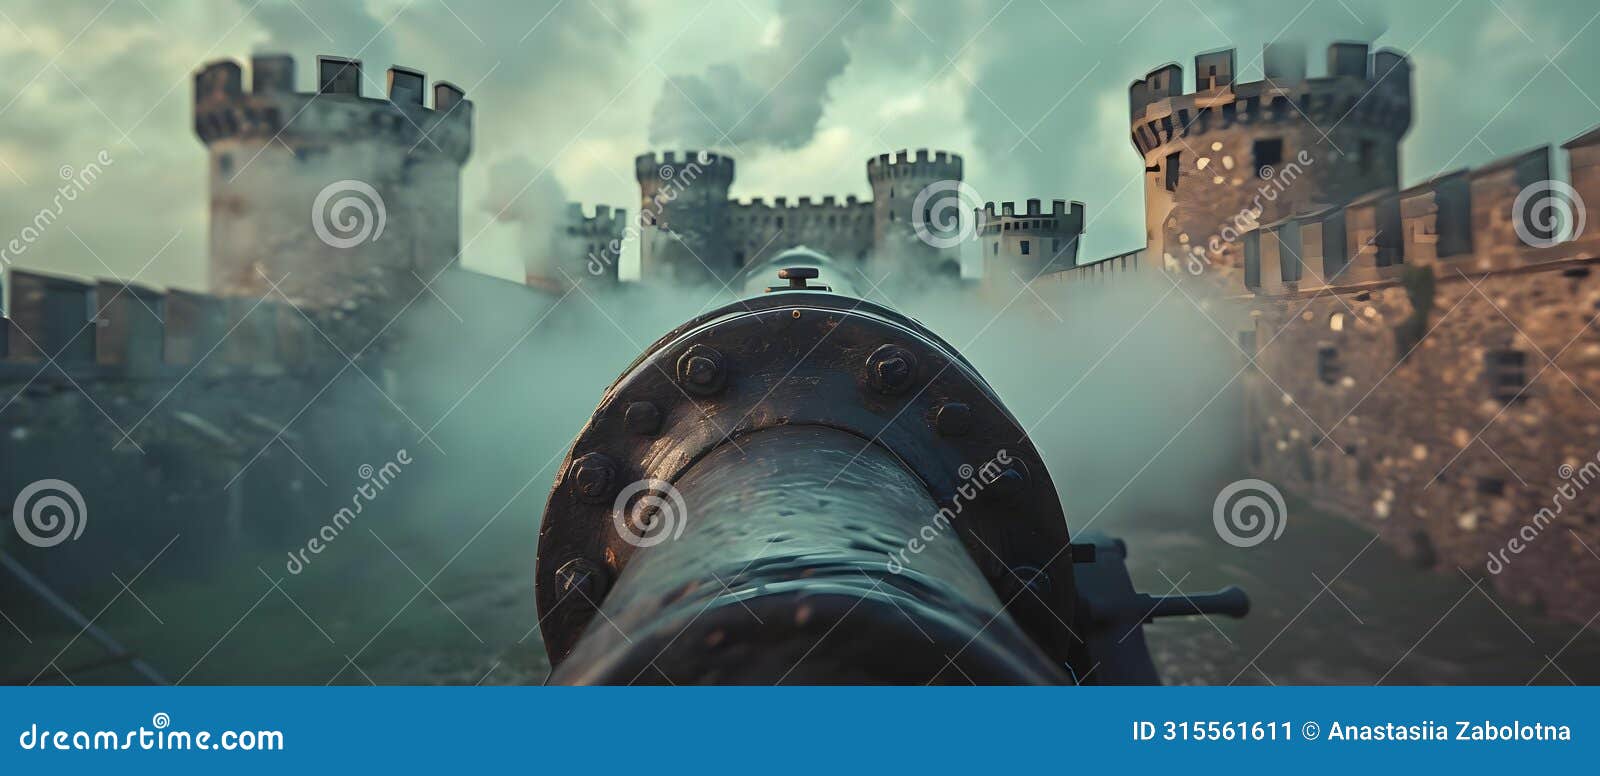 guardians of the past: castles & cannons amidst the mist. concept medieval history, castle